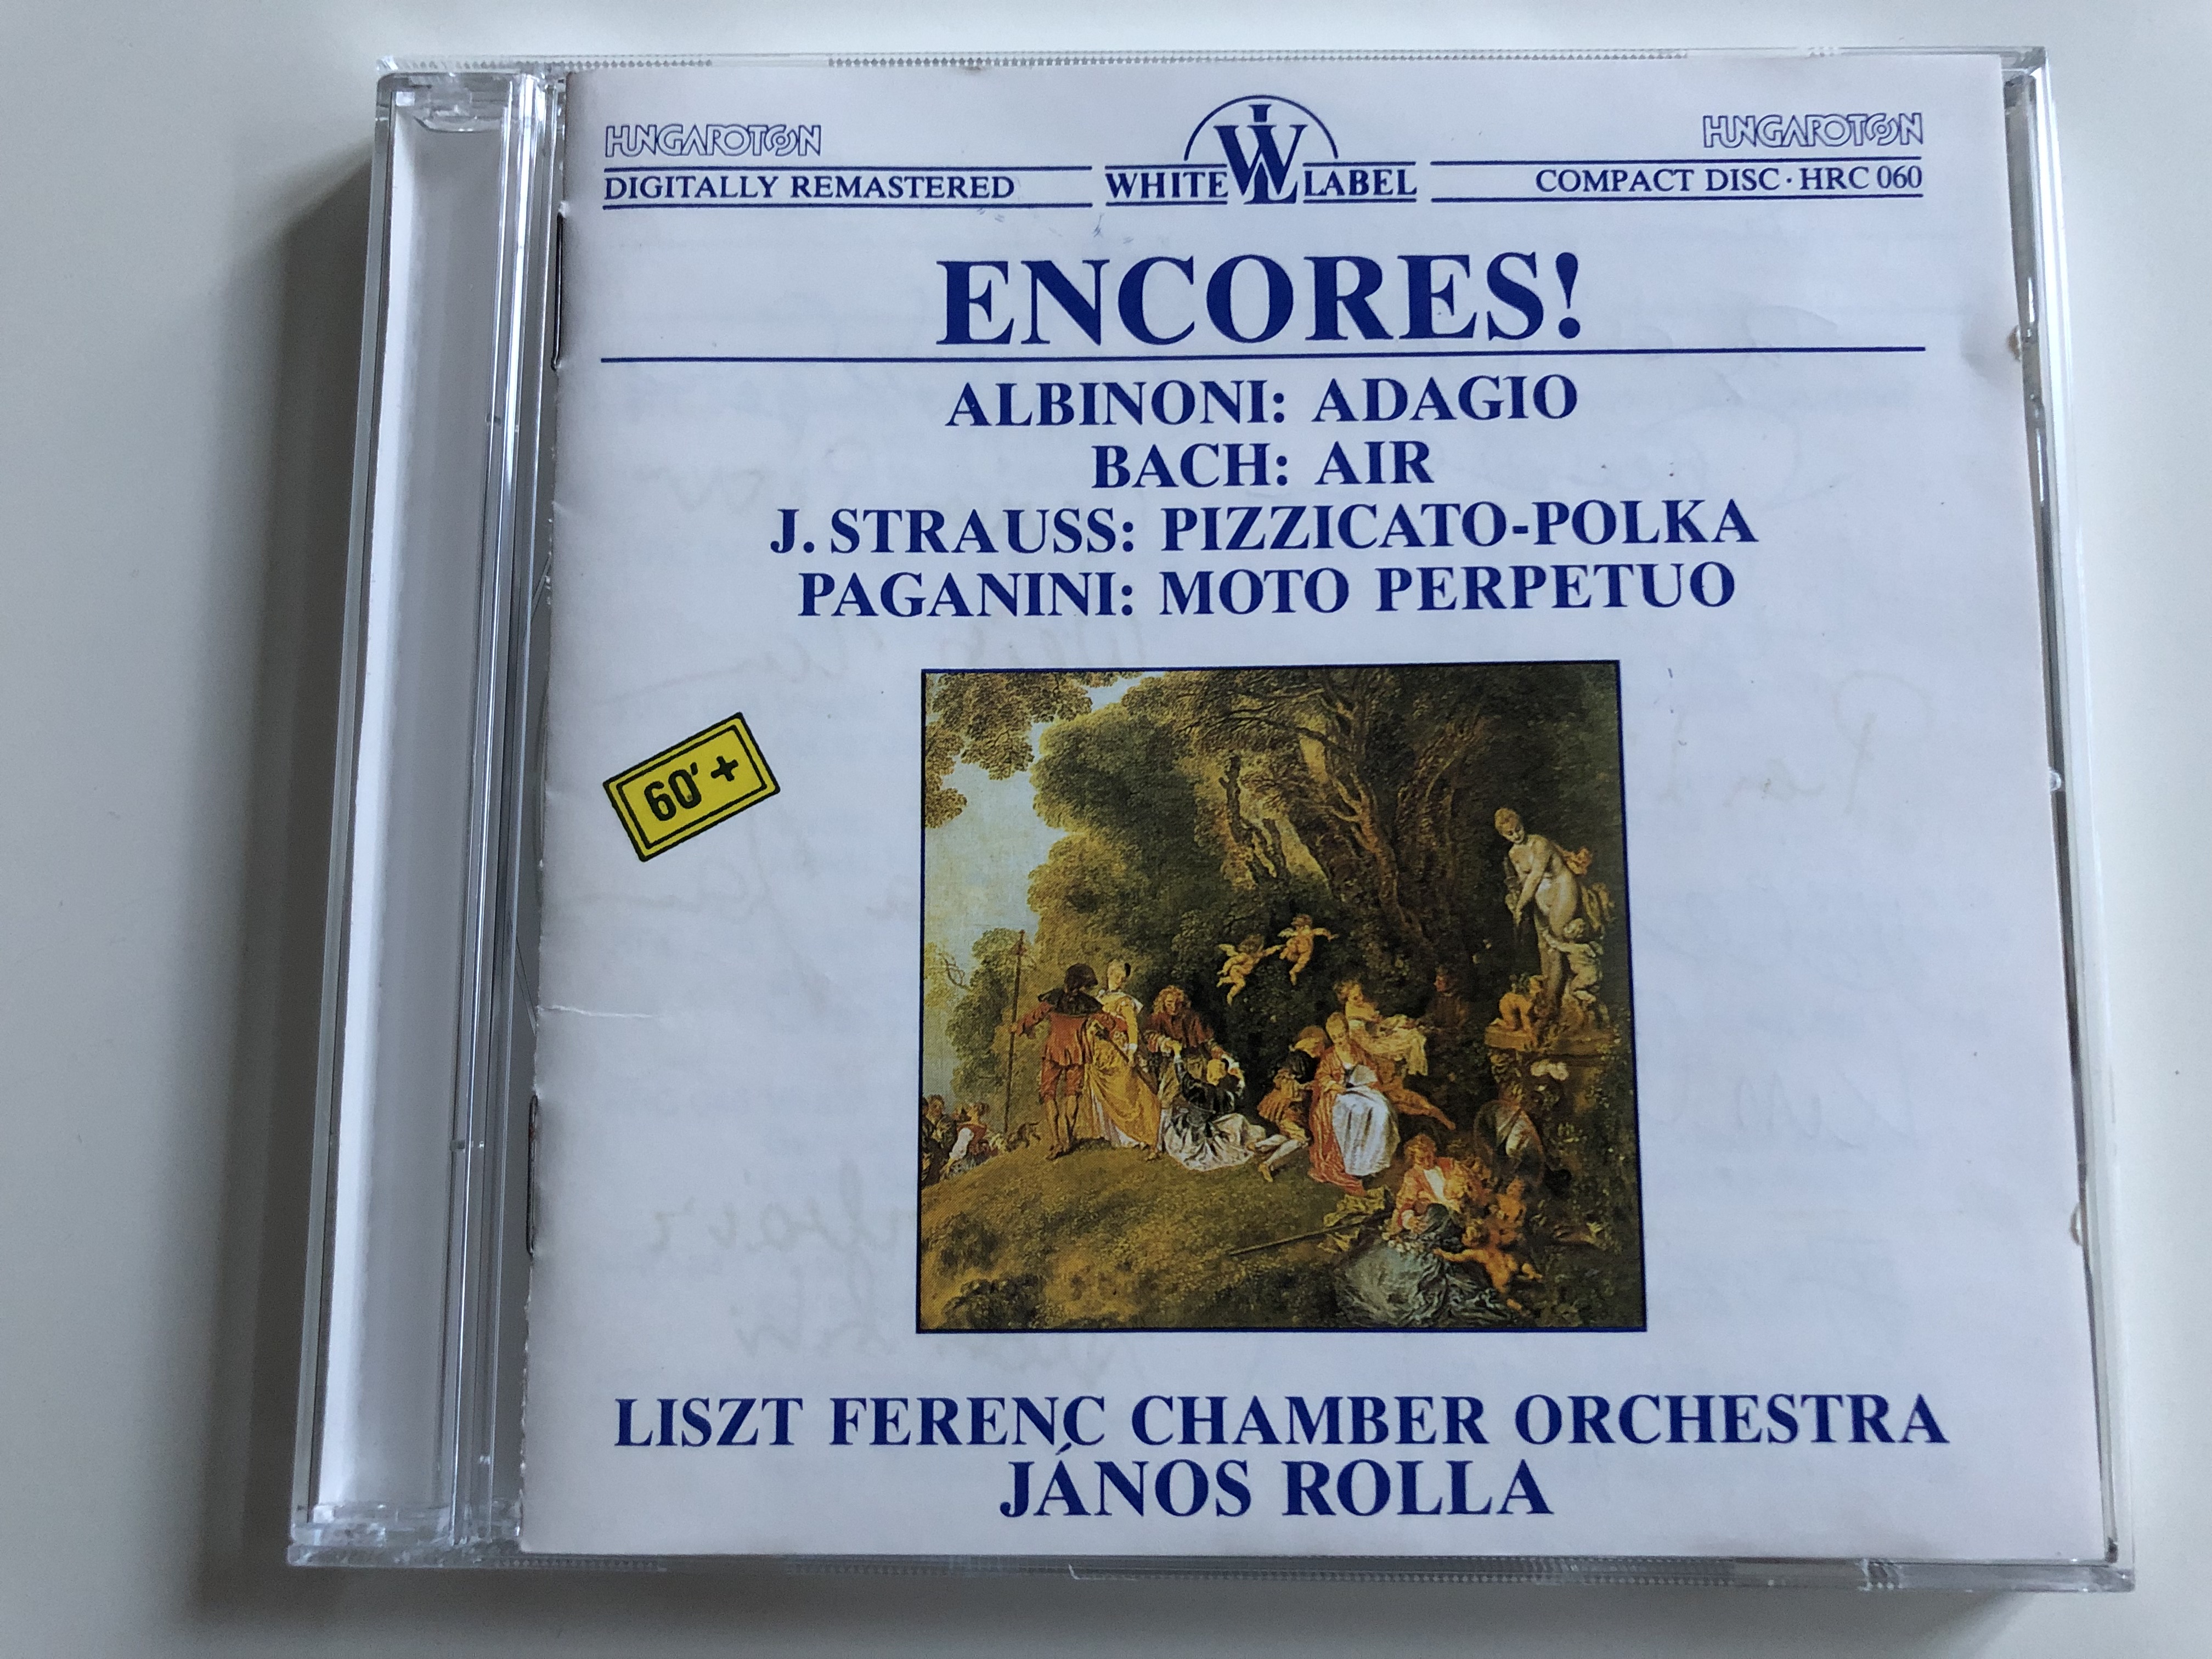 encores-albinoni-adagio-bach-air-j.-strauss-pizzicato-polka-paganini-moto-perpetuo-liszt-ferenc-chamber-orchestra-conudcted-by-j-nos-rolla-hungaroton-audio-cd-1987-hrc-060-2-.jpg